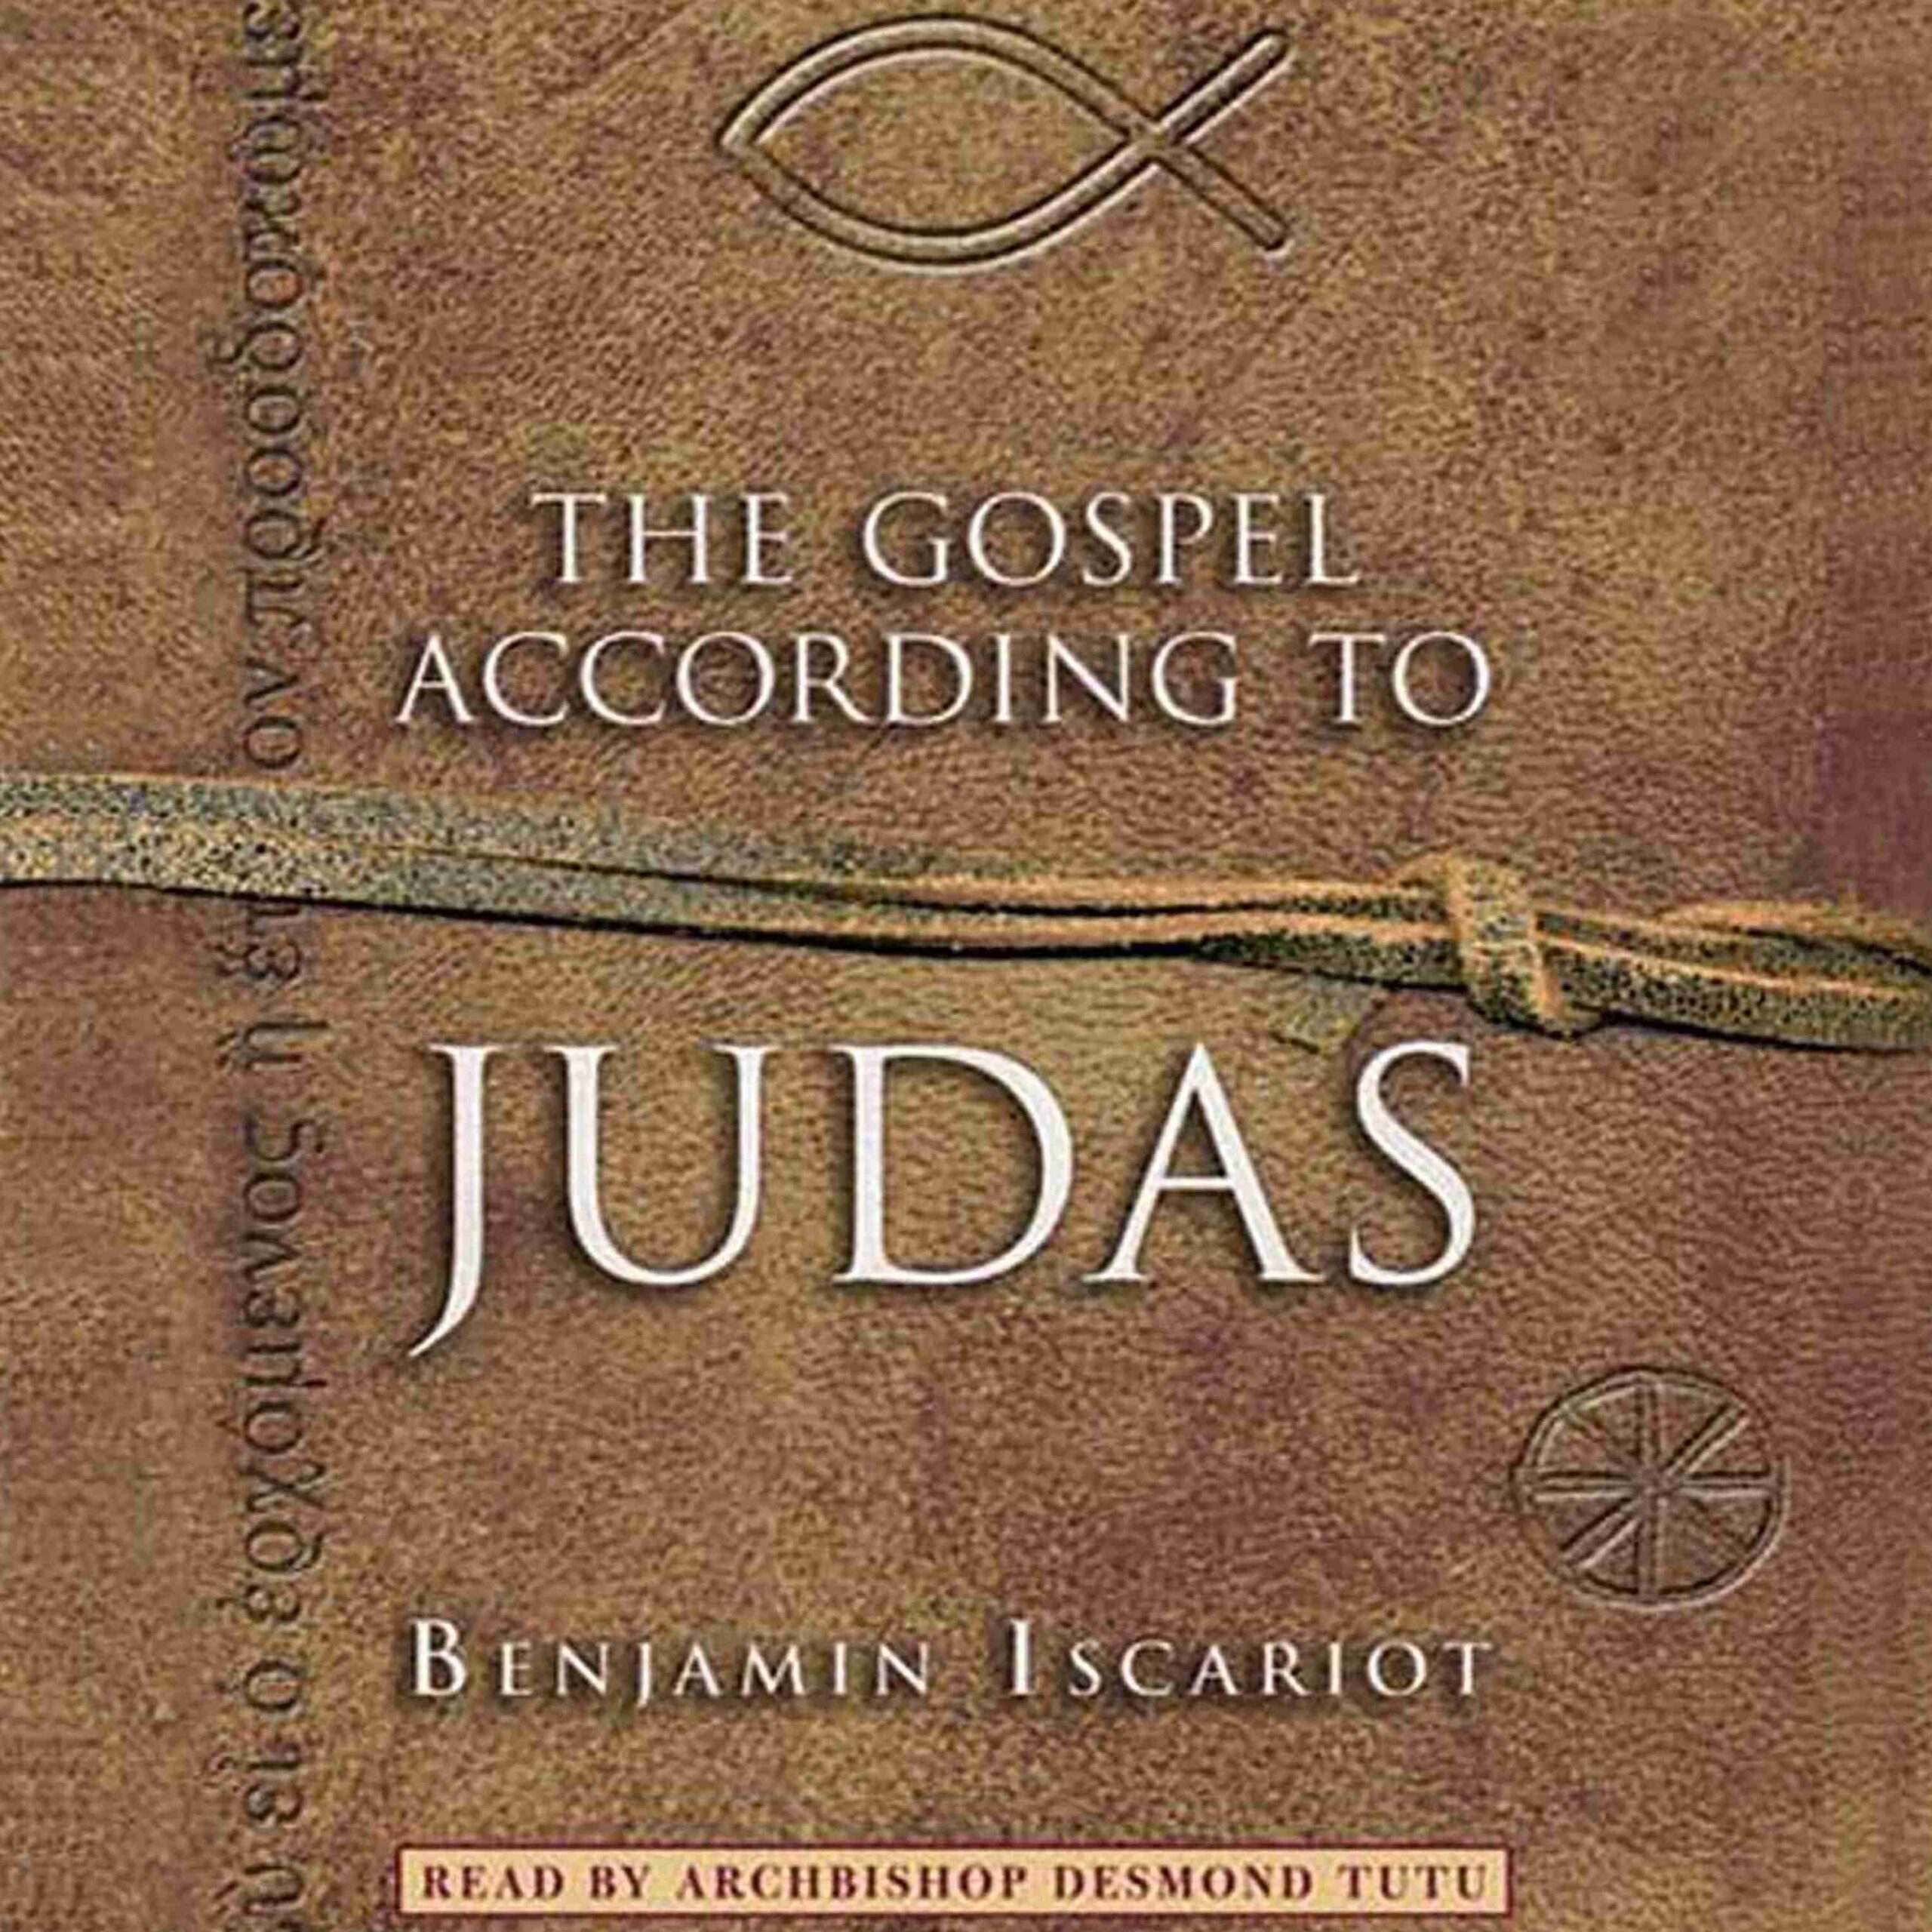 The Gospel According to Judas by Benjamin Iscariot byJeffrey Archer Audiobook. 10.99 USD